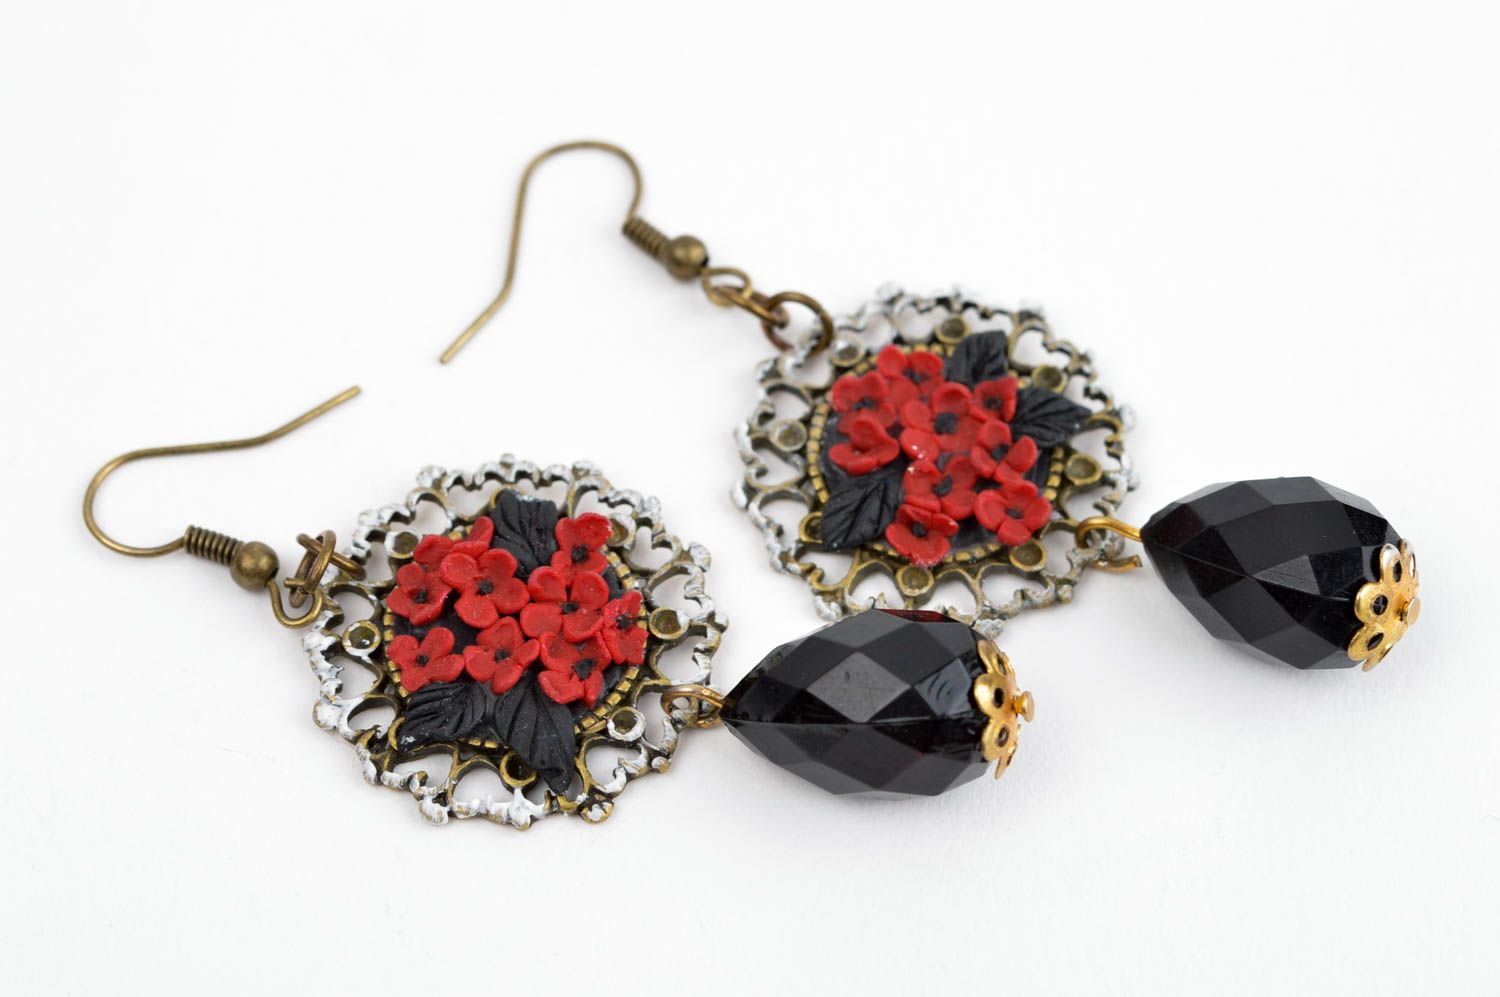 Handmade stylish cute earrings polymer clay earrings jewelry in vintage style photo 3